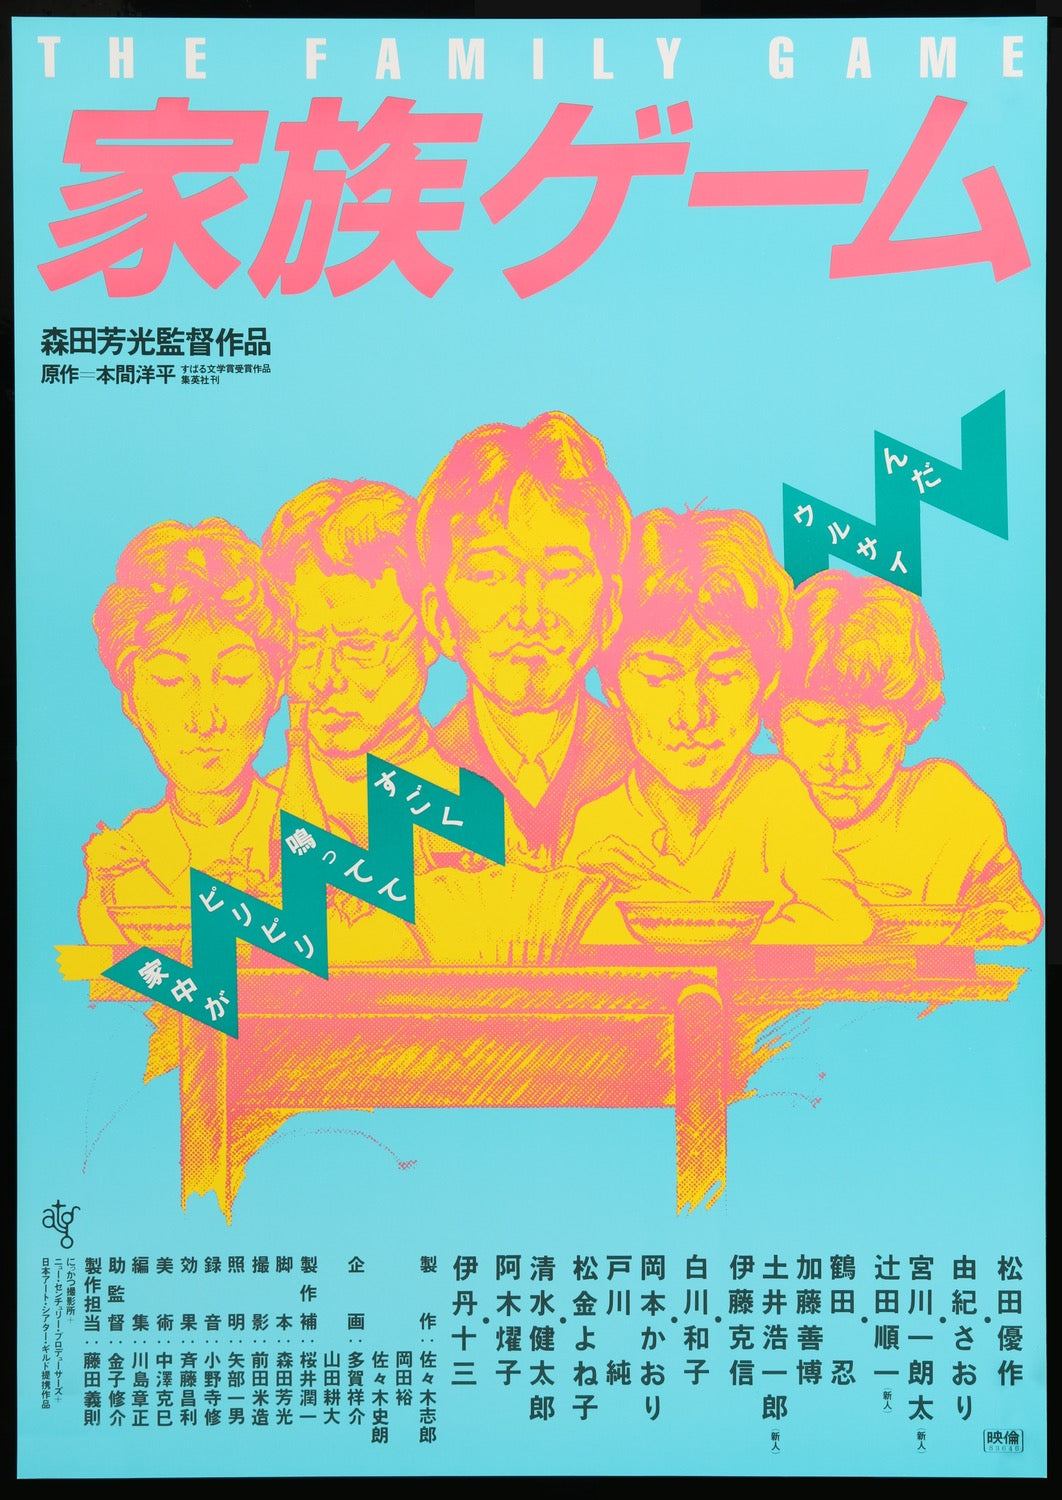 Family Game (1983) original movie poster for sale at Original Film Art